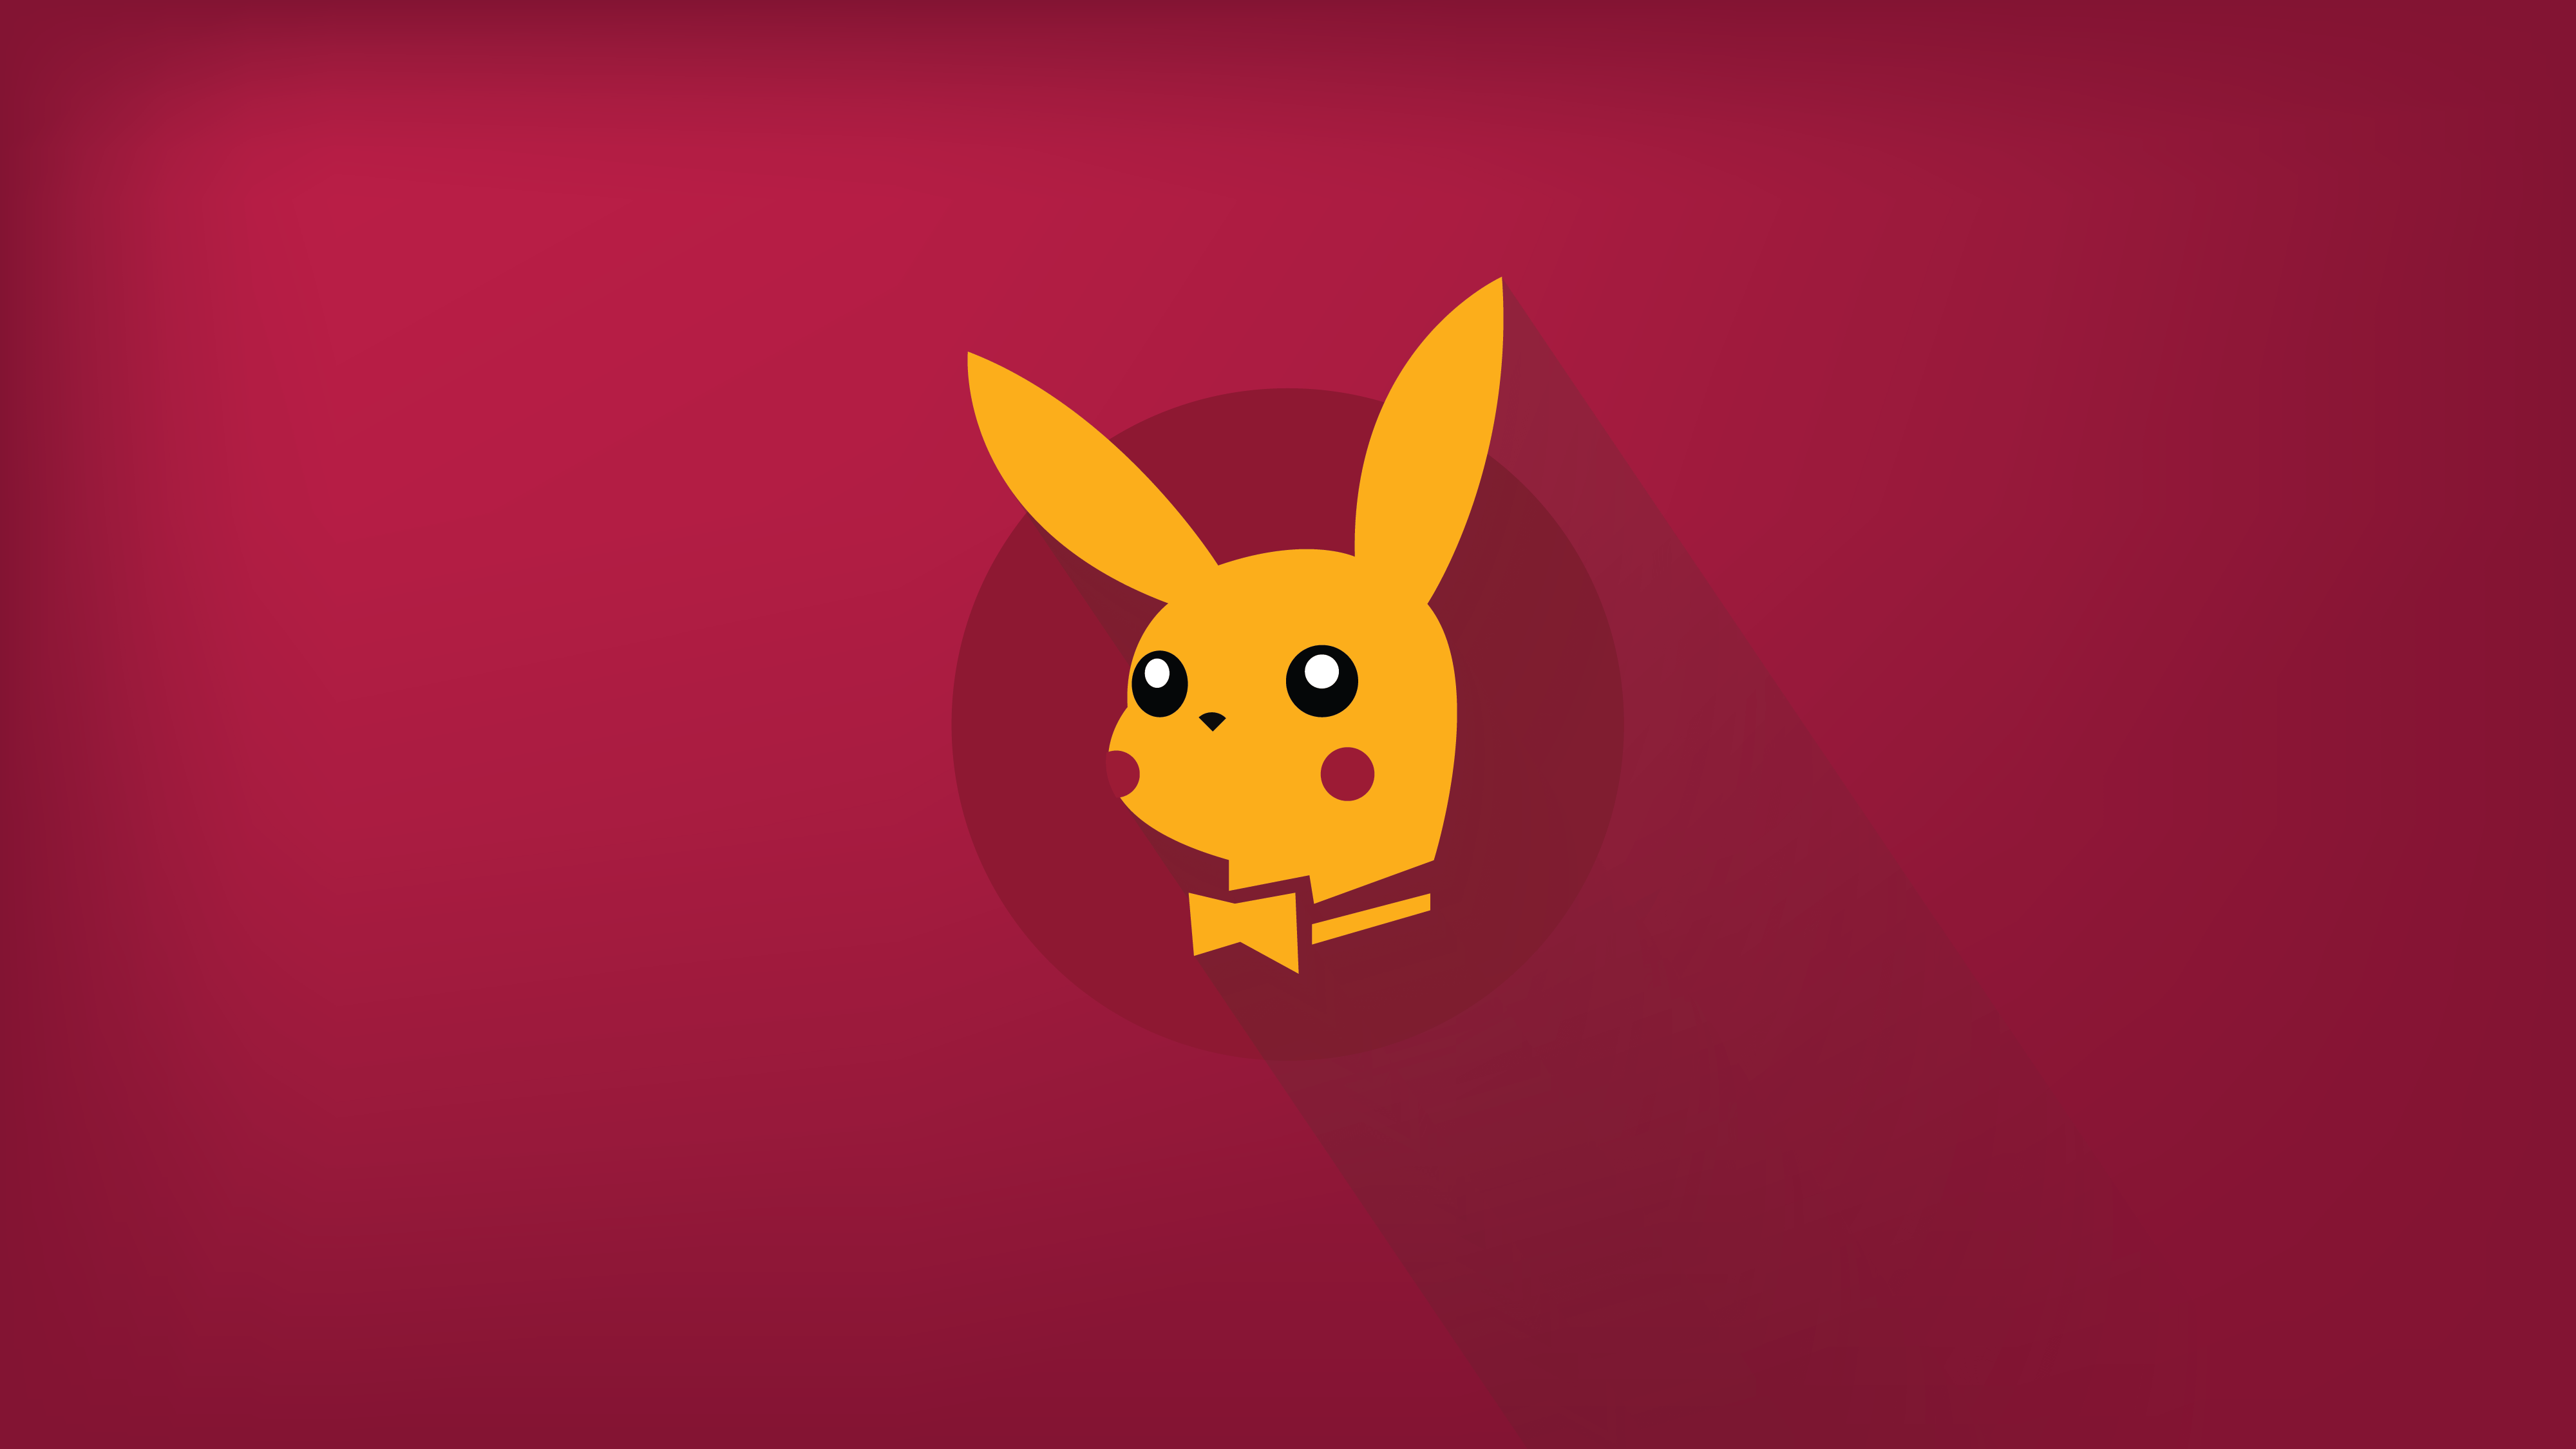 Playboy Pikachu [4000x2250] [OC]